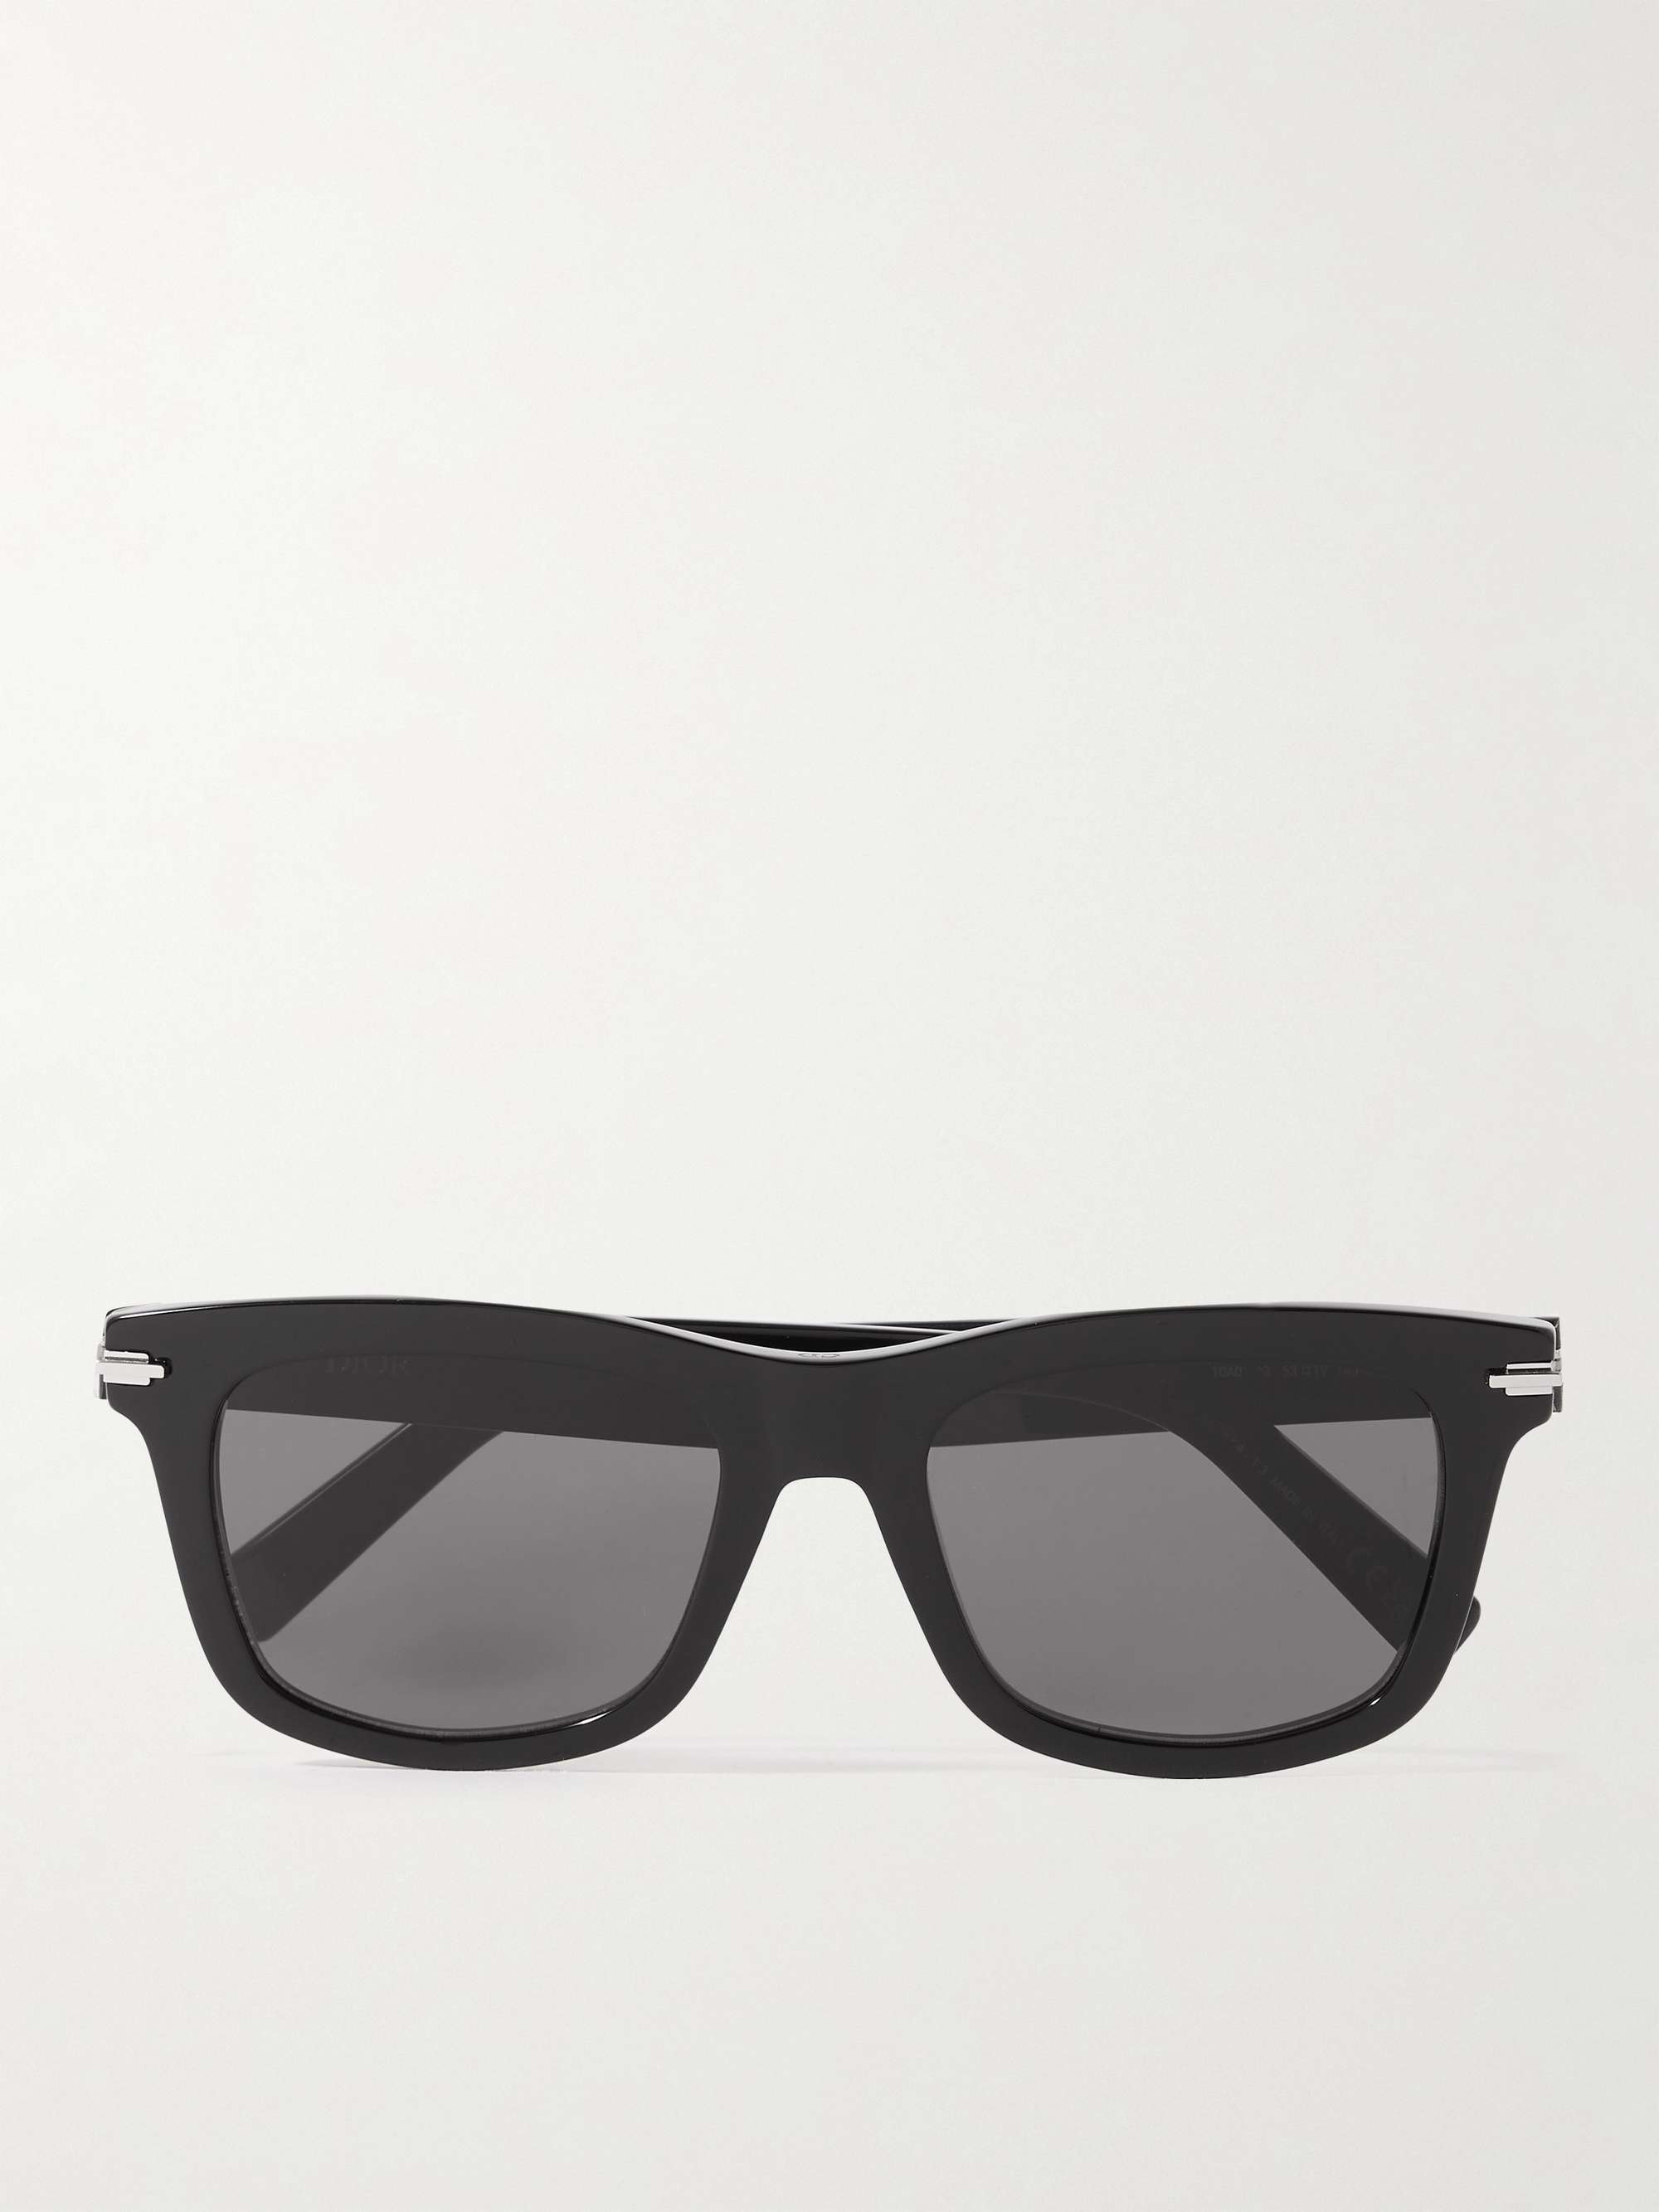 DIOR EYEWEAR DiorBlackSuit S11I D-Frame Tortoiseshell Acetate Sunglasses